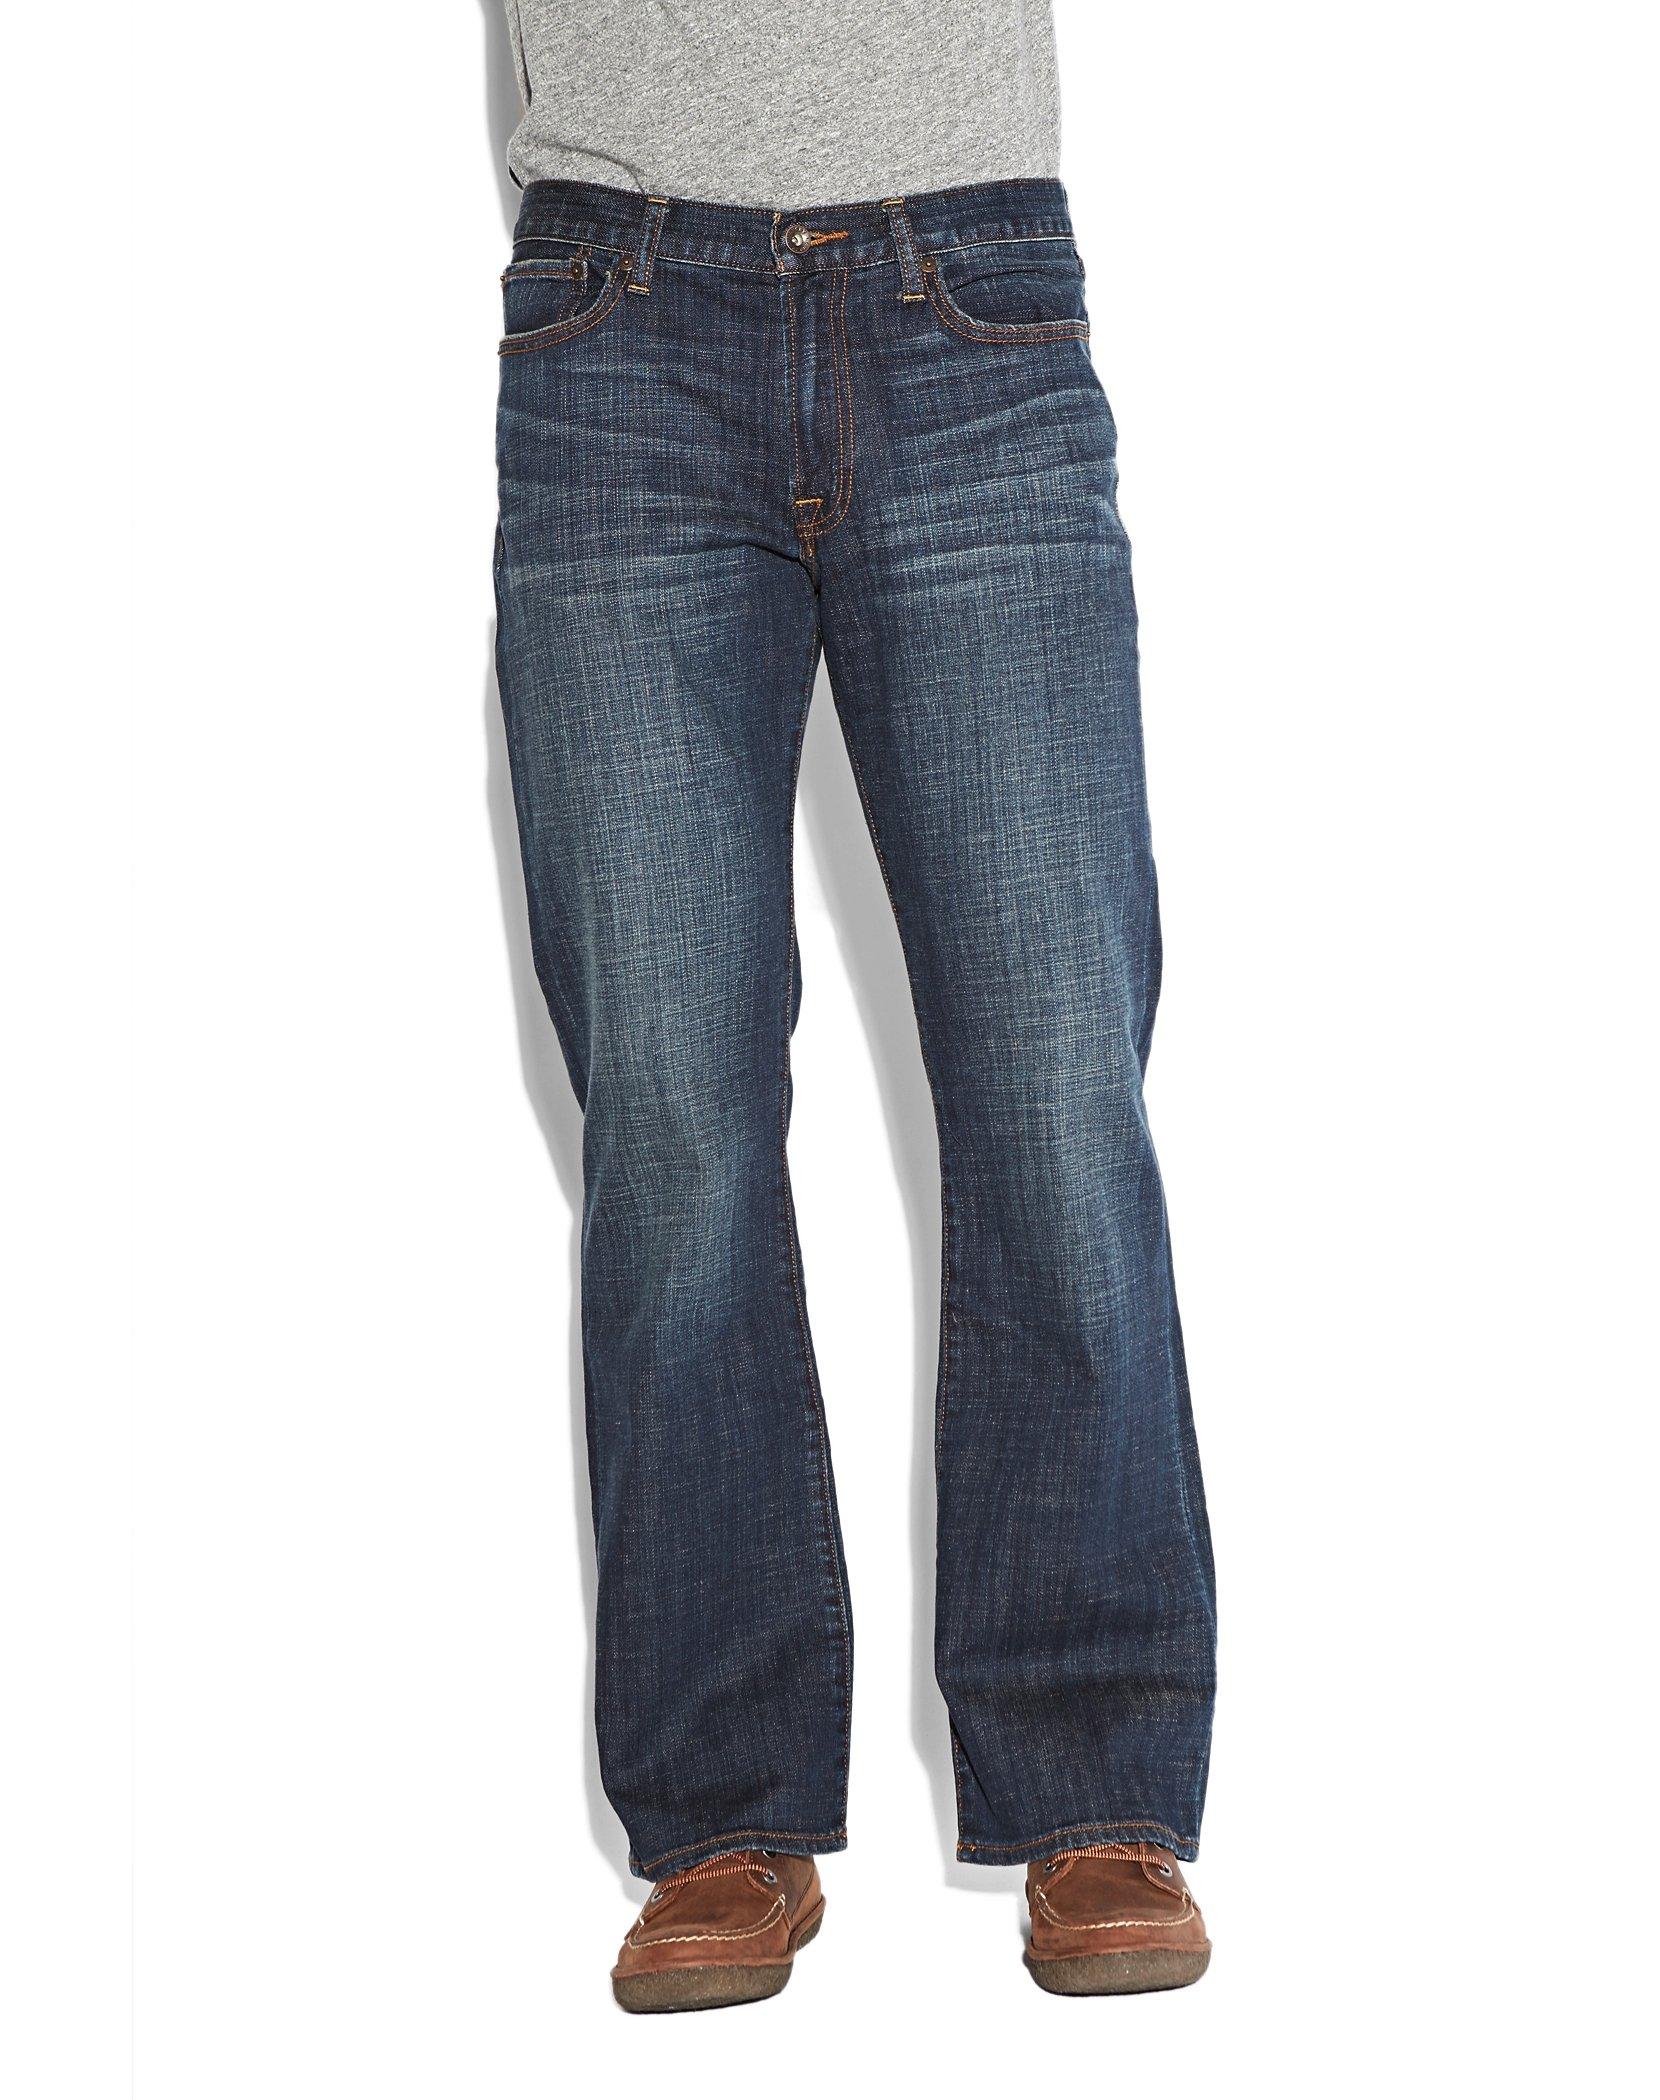 kevlar lined jeans